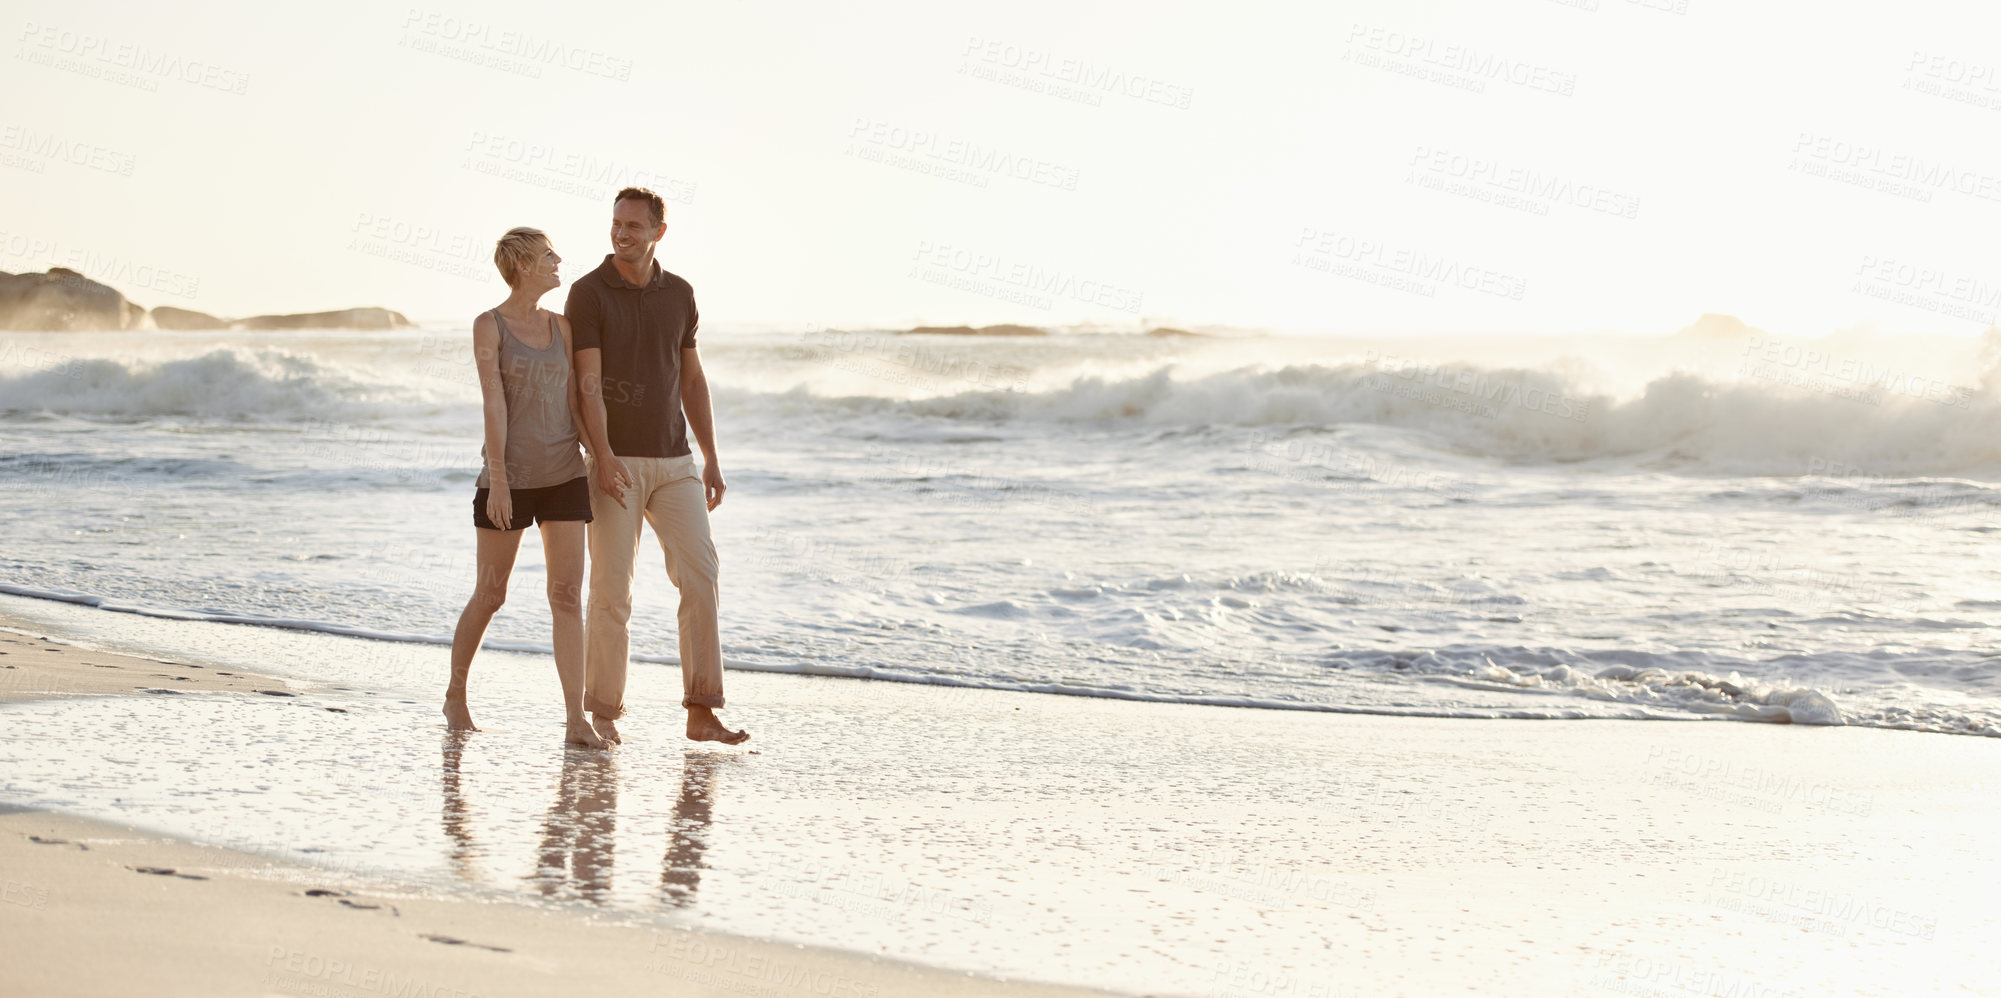 Buy stock photo A loving couple on the beach